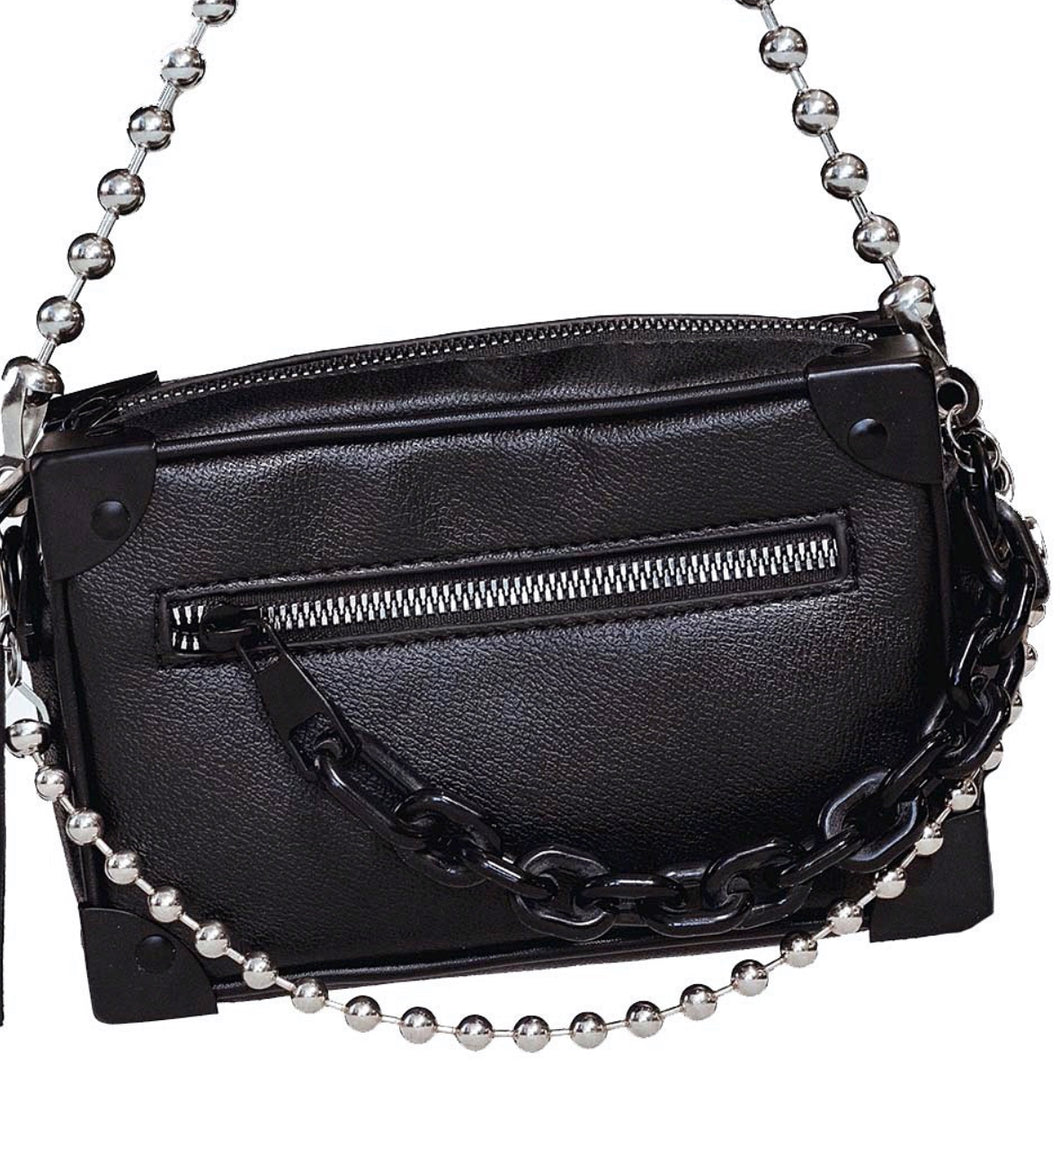 Iconic Chain Handbag